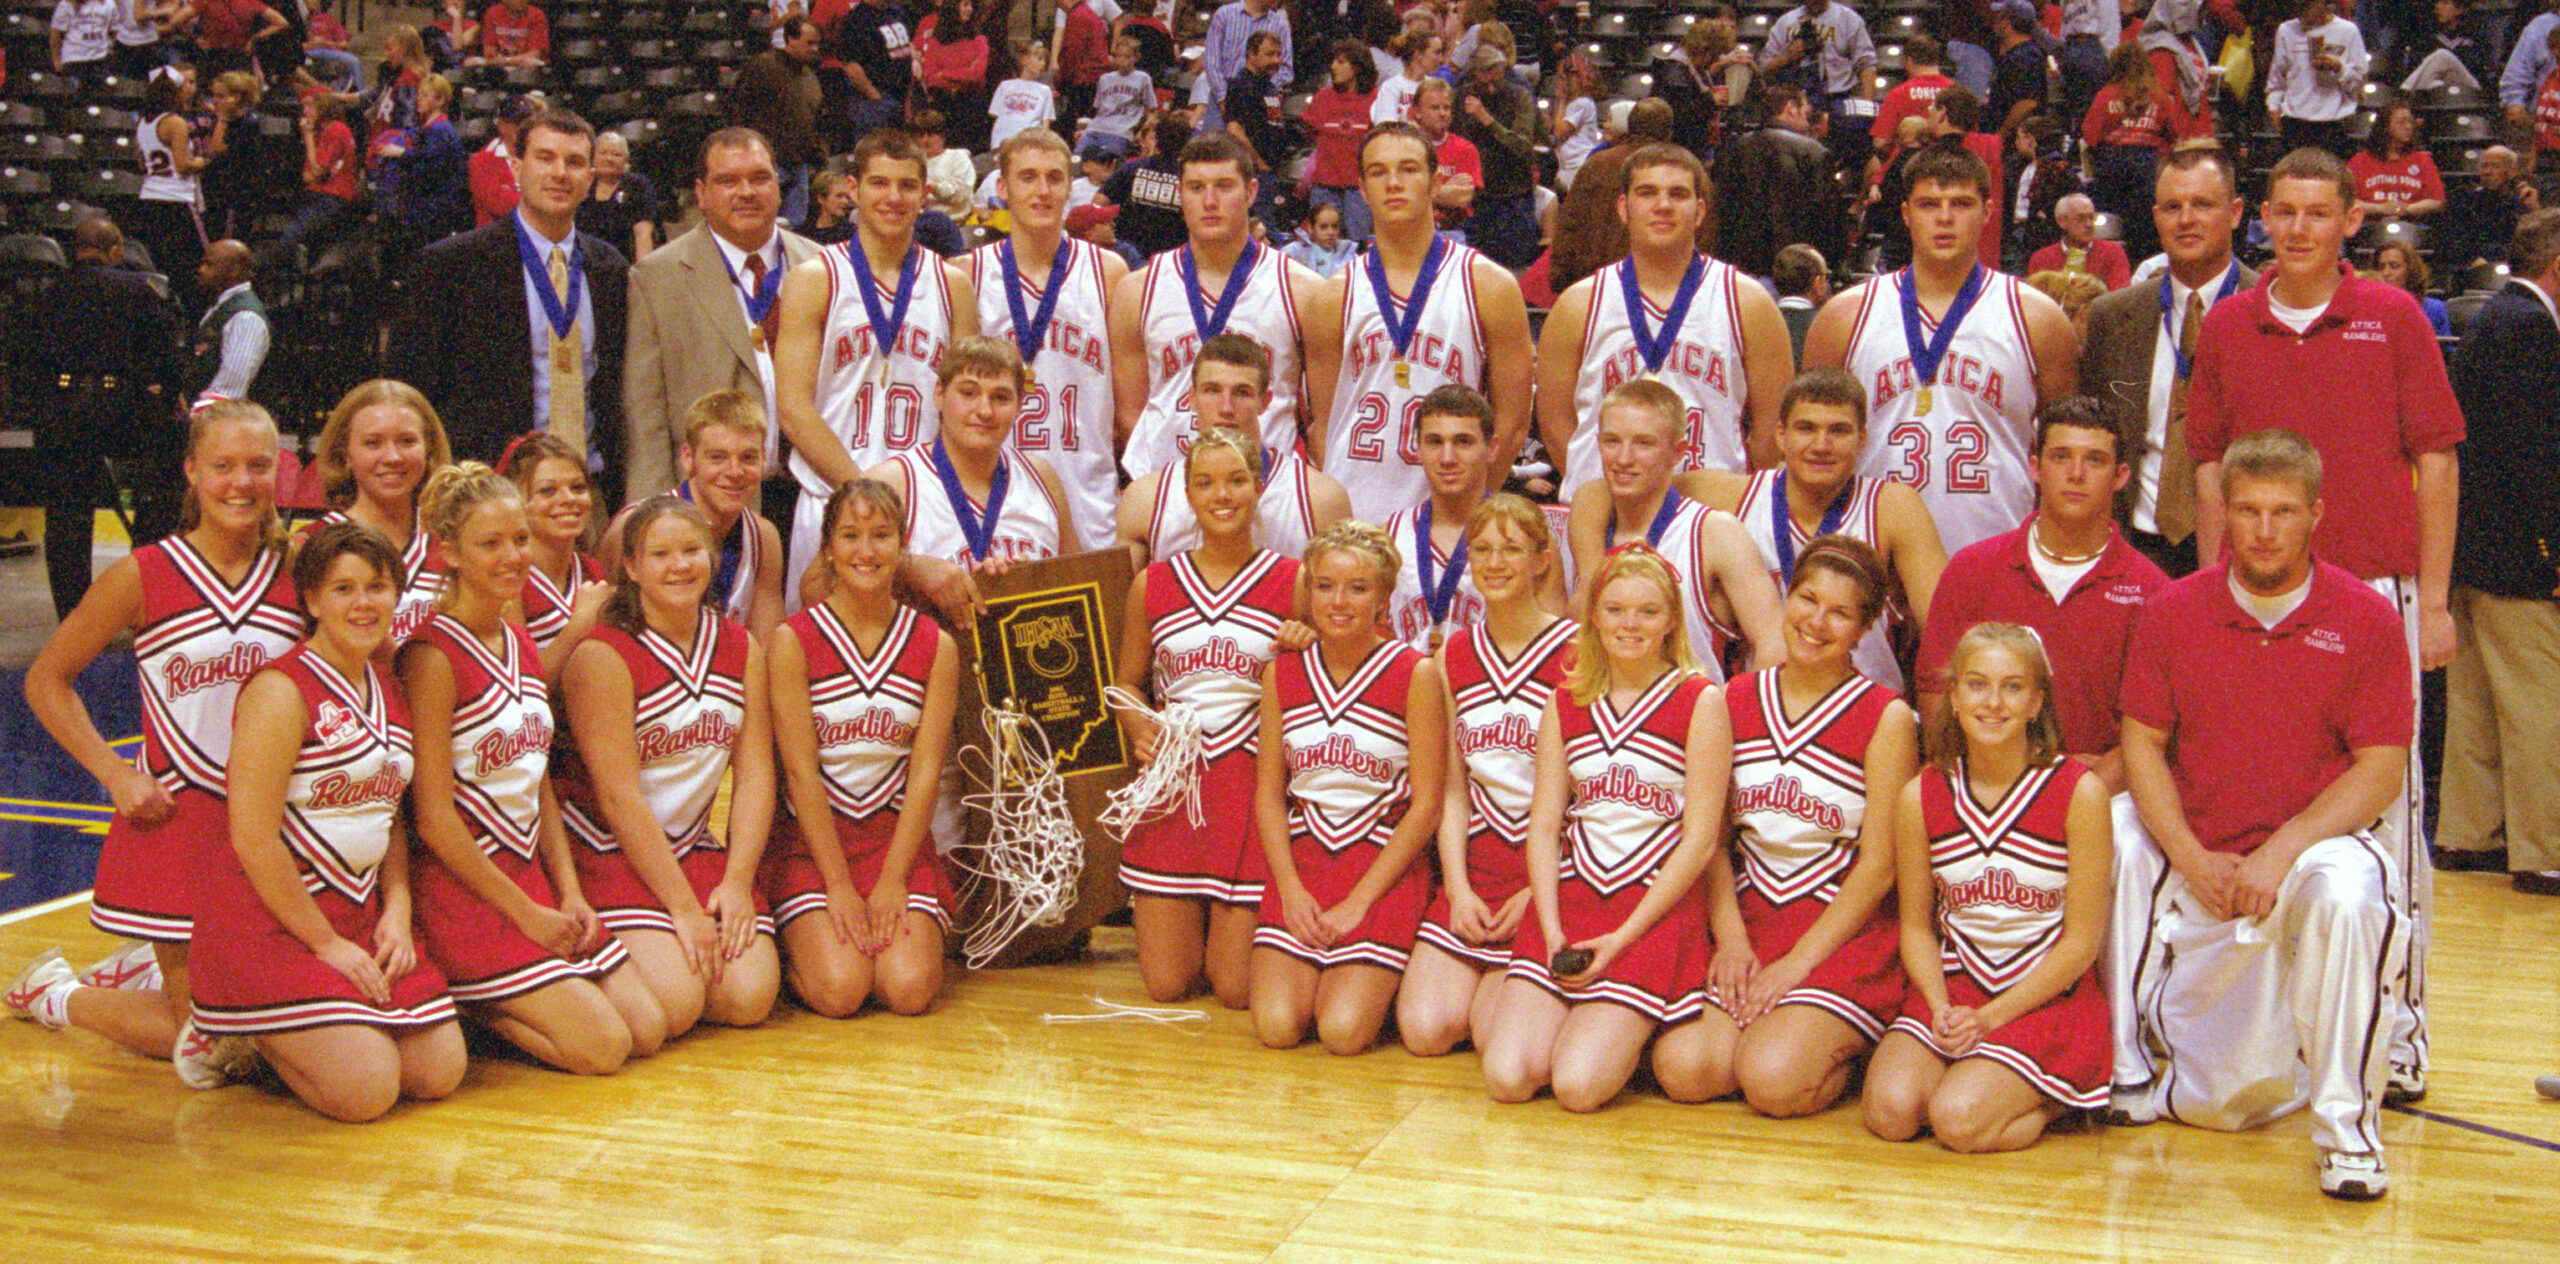 2001 Attica Boys Basketball Team